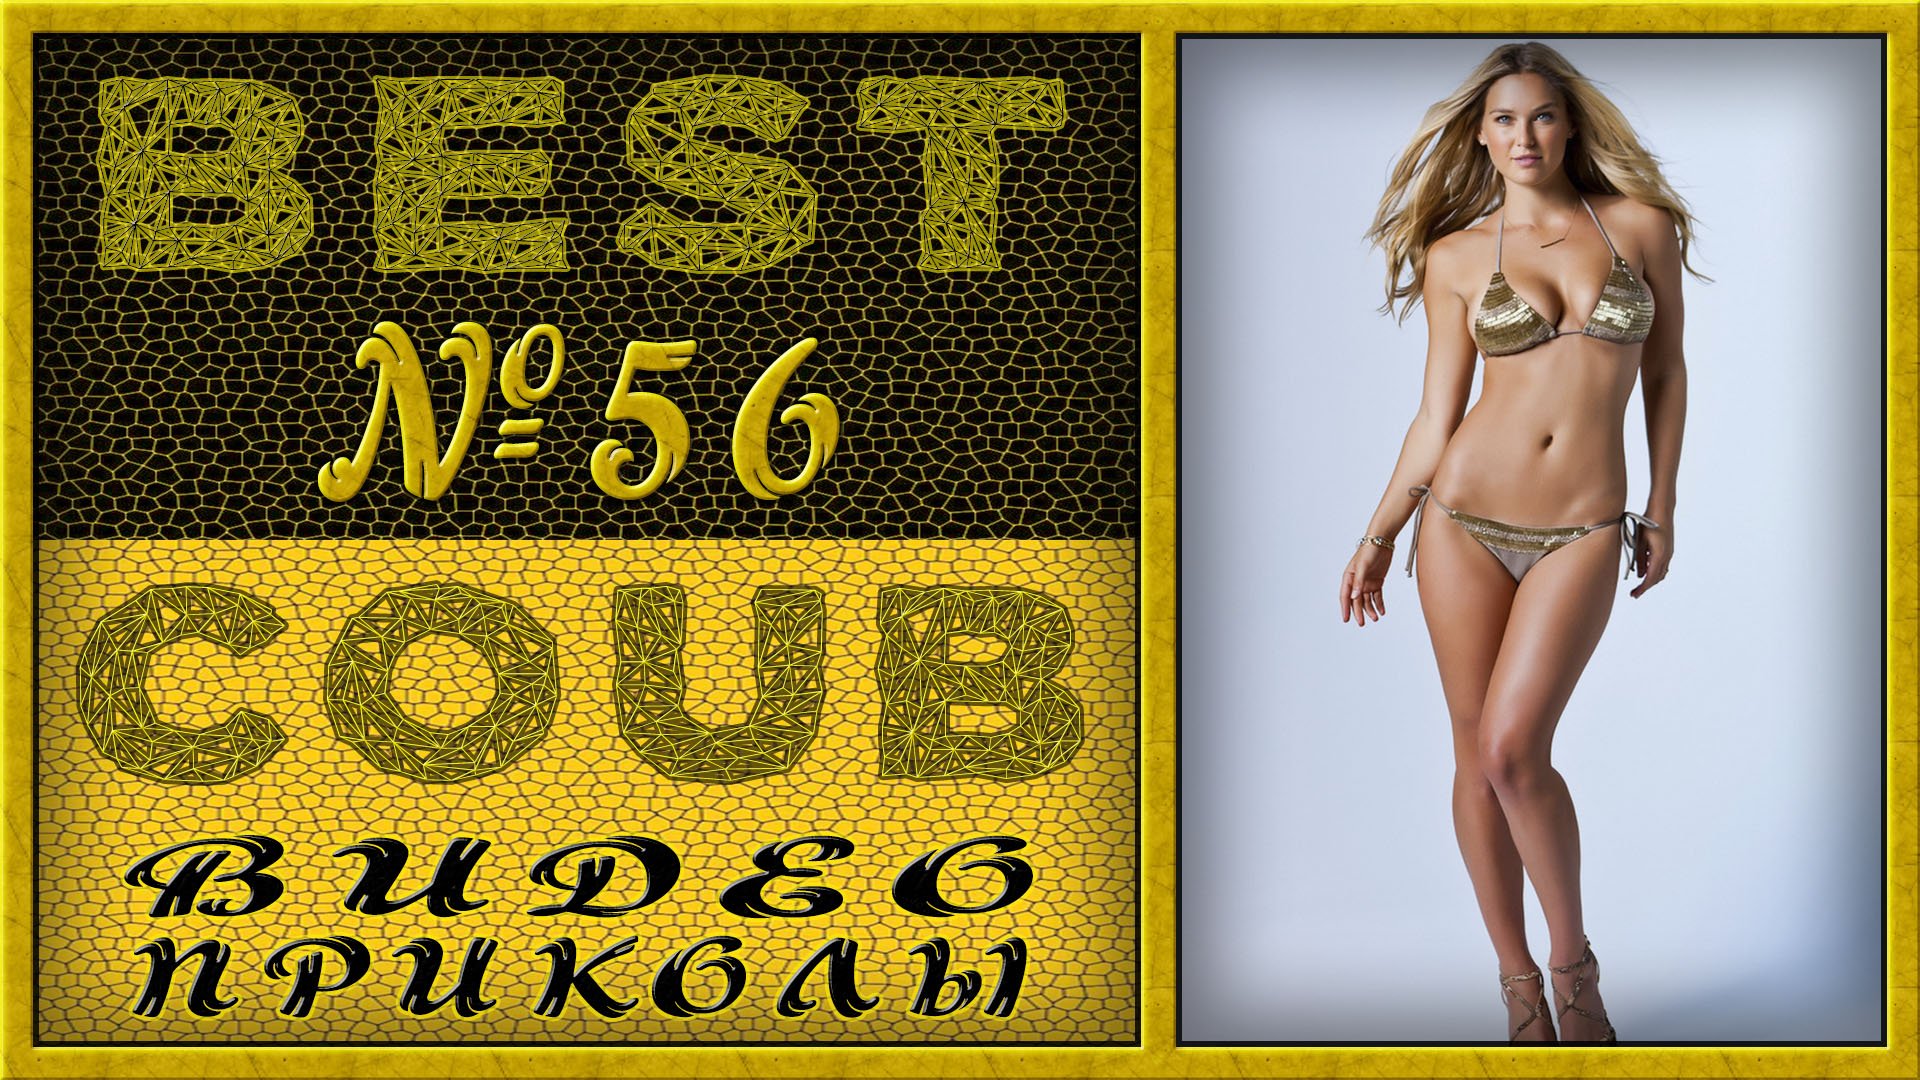 Best cube fille gros sein nue site cdulib.ru